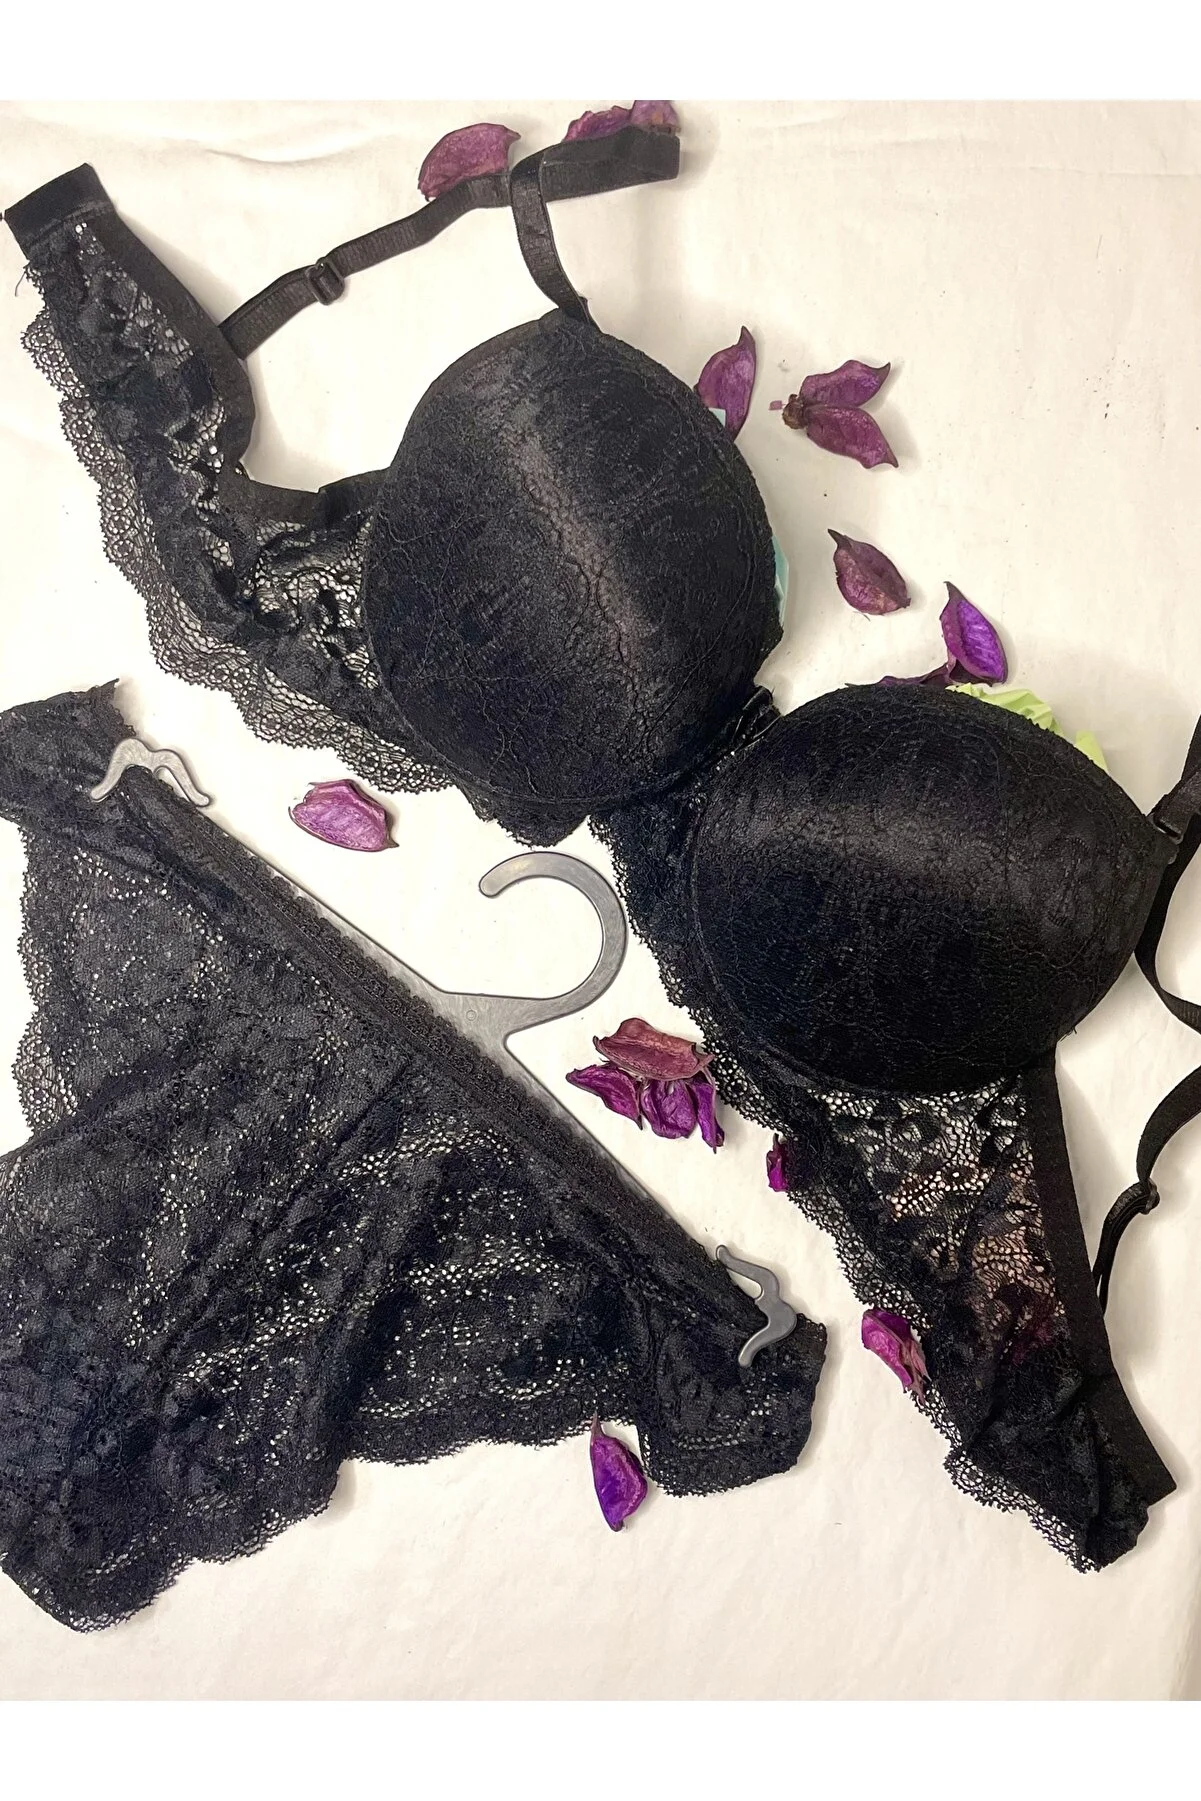 Preloved bra panties & Ligerie from facinating women's cloesets